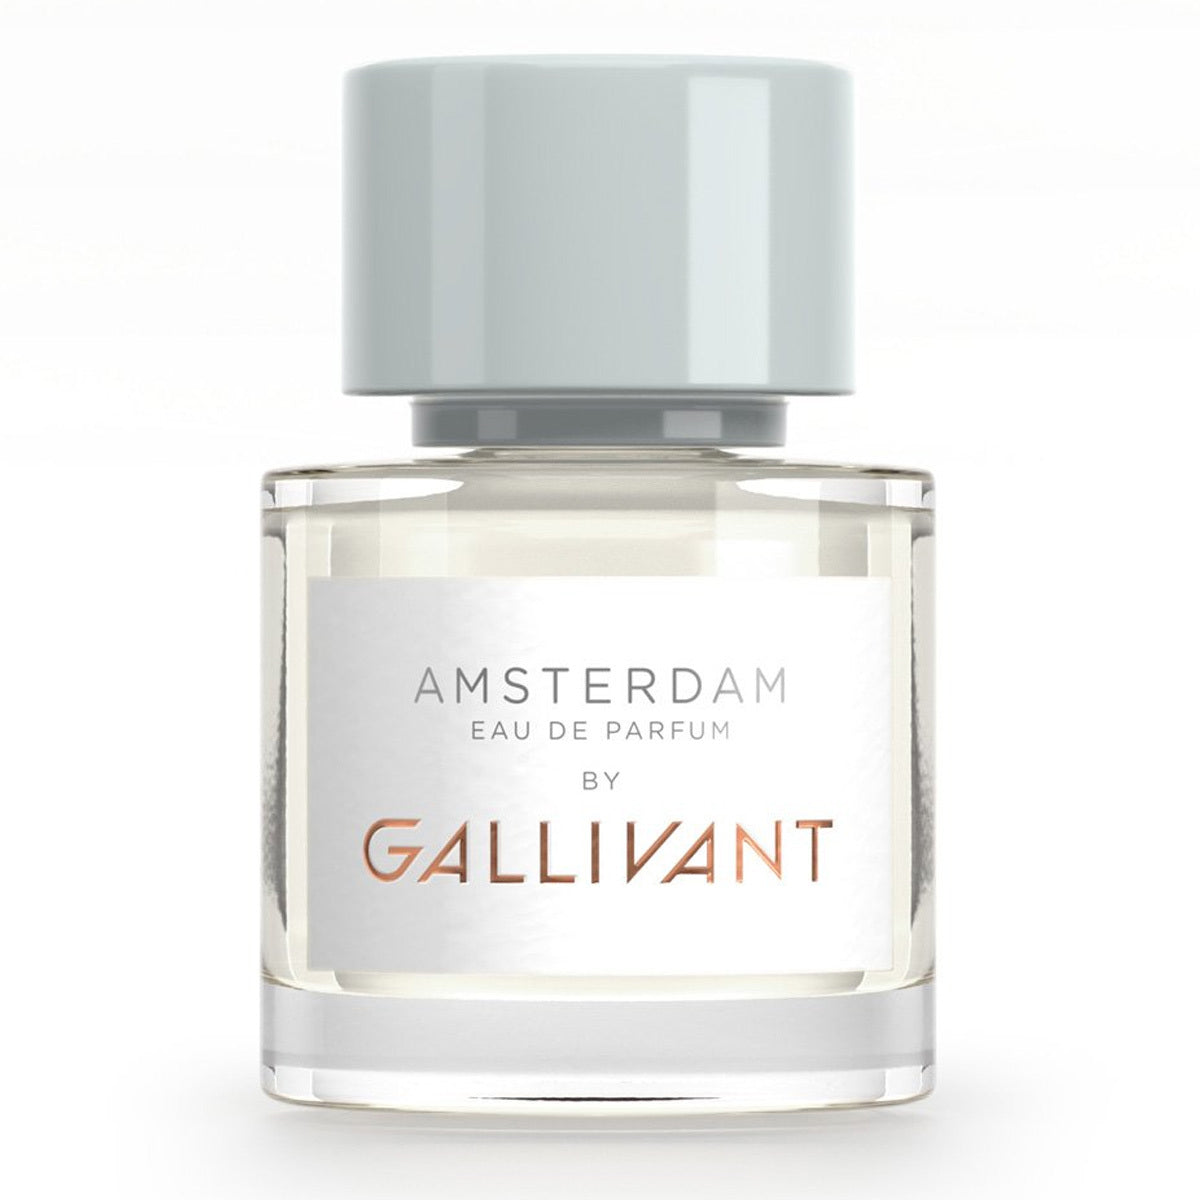 Primary image of Amsterdam Eau de Parfum